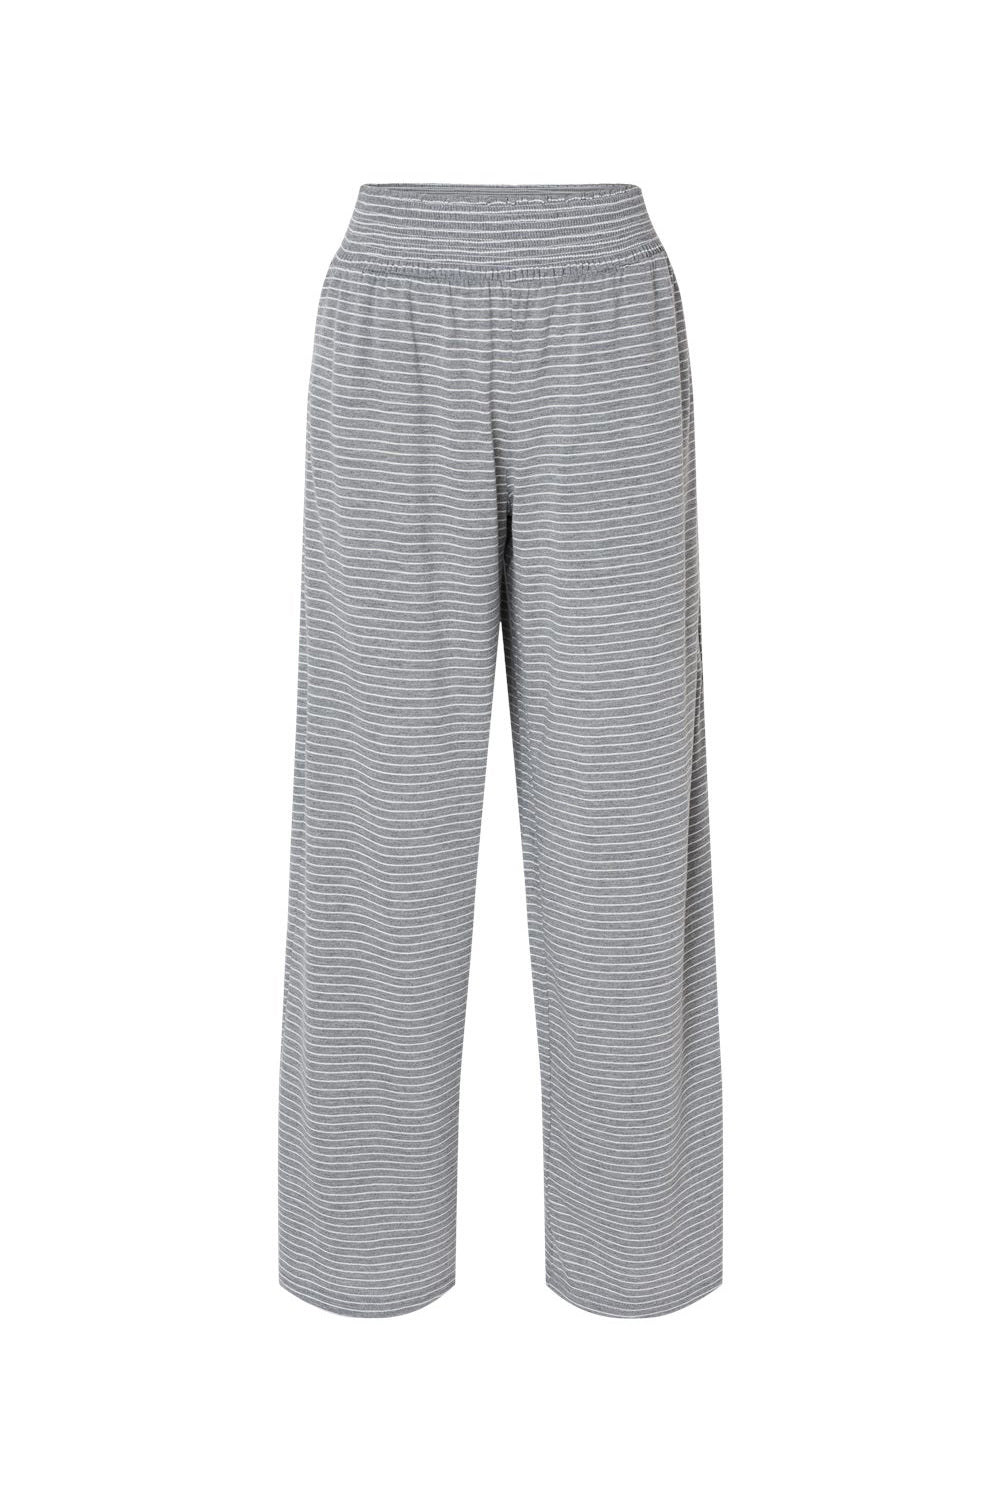 Boxercraft BW6615 Womens Evelyn Lounge Pants Oxford Grey/White Flat Front